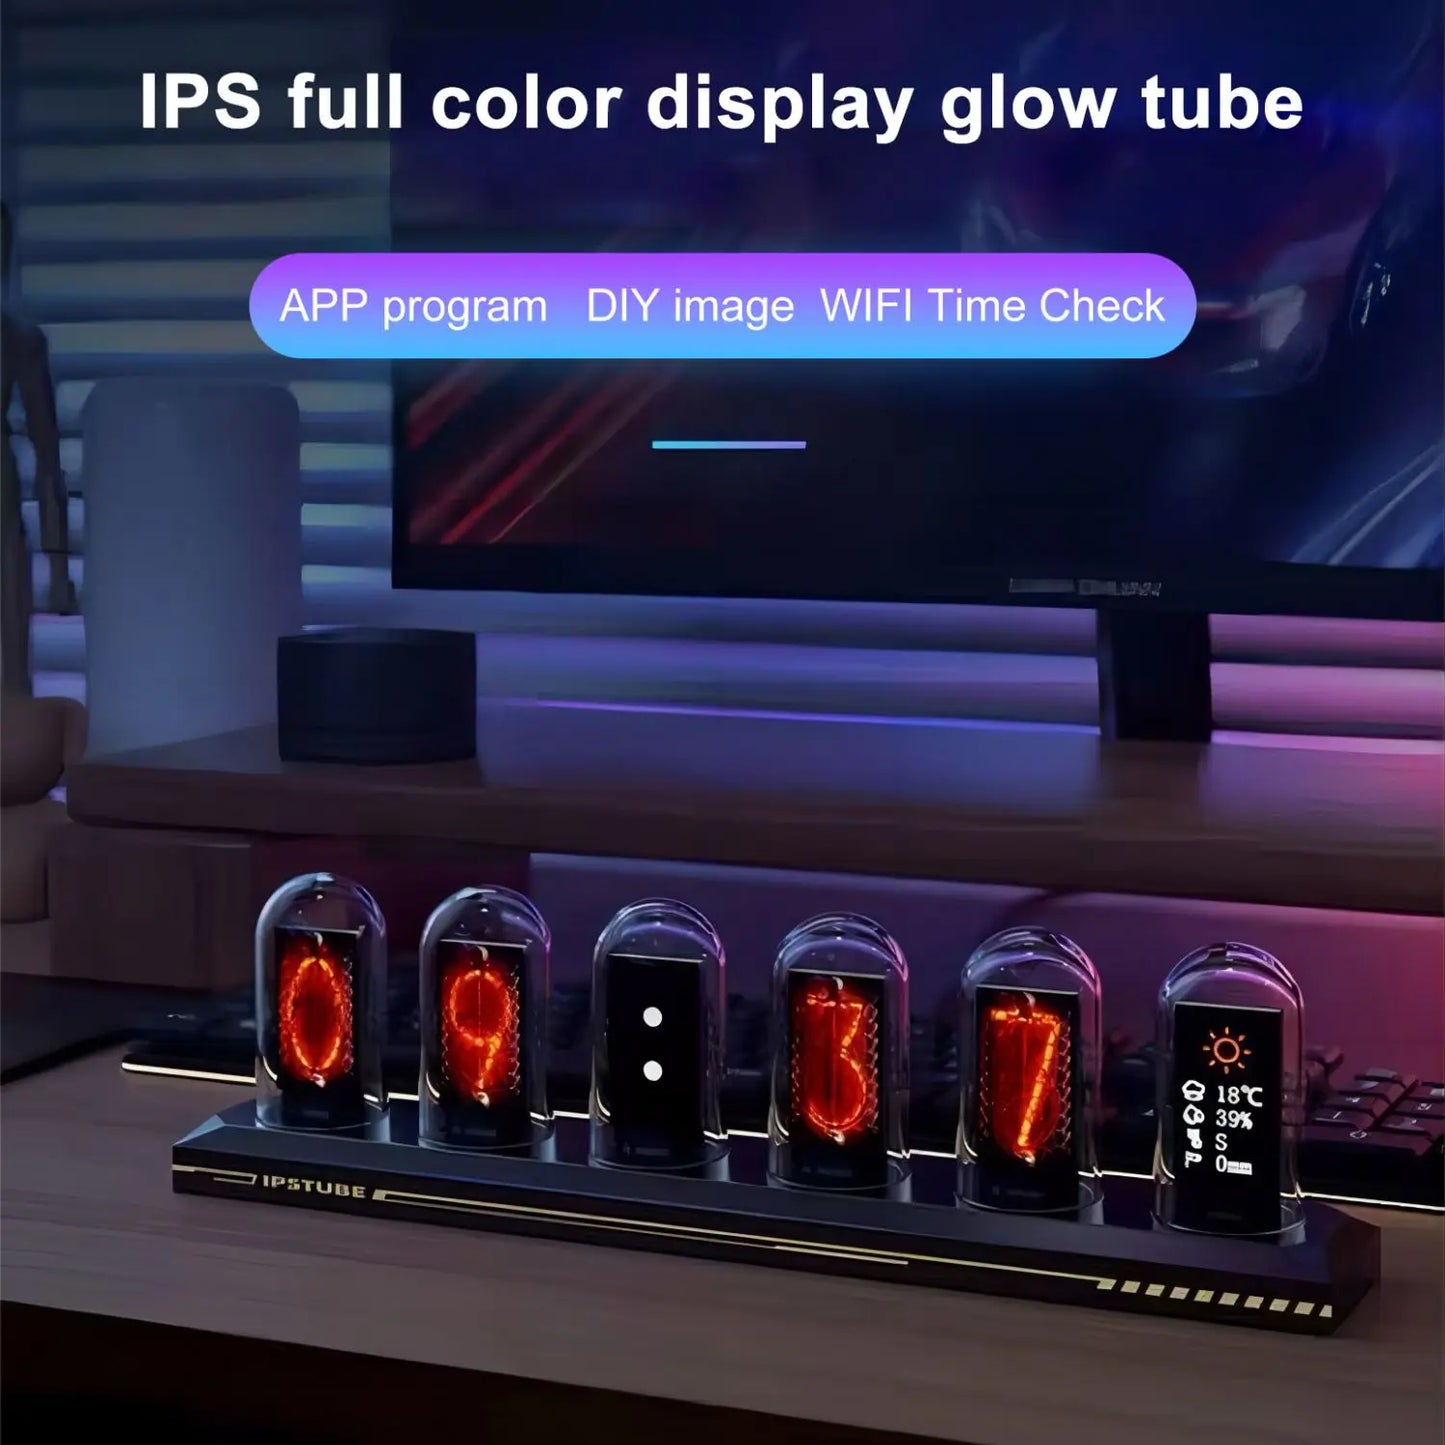 Glow Tube 16 Mio. Farben / verschiedene Modi / Appgesteuert  - NerdyGeekStore